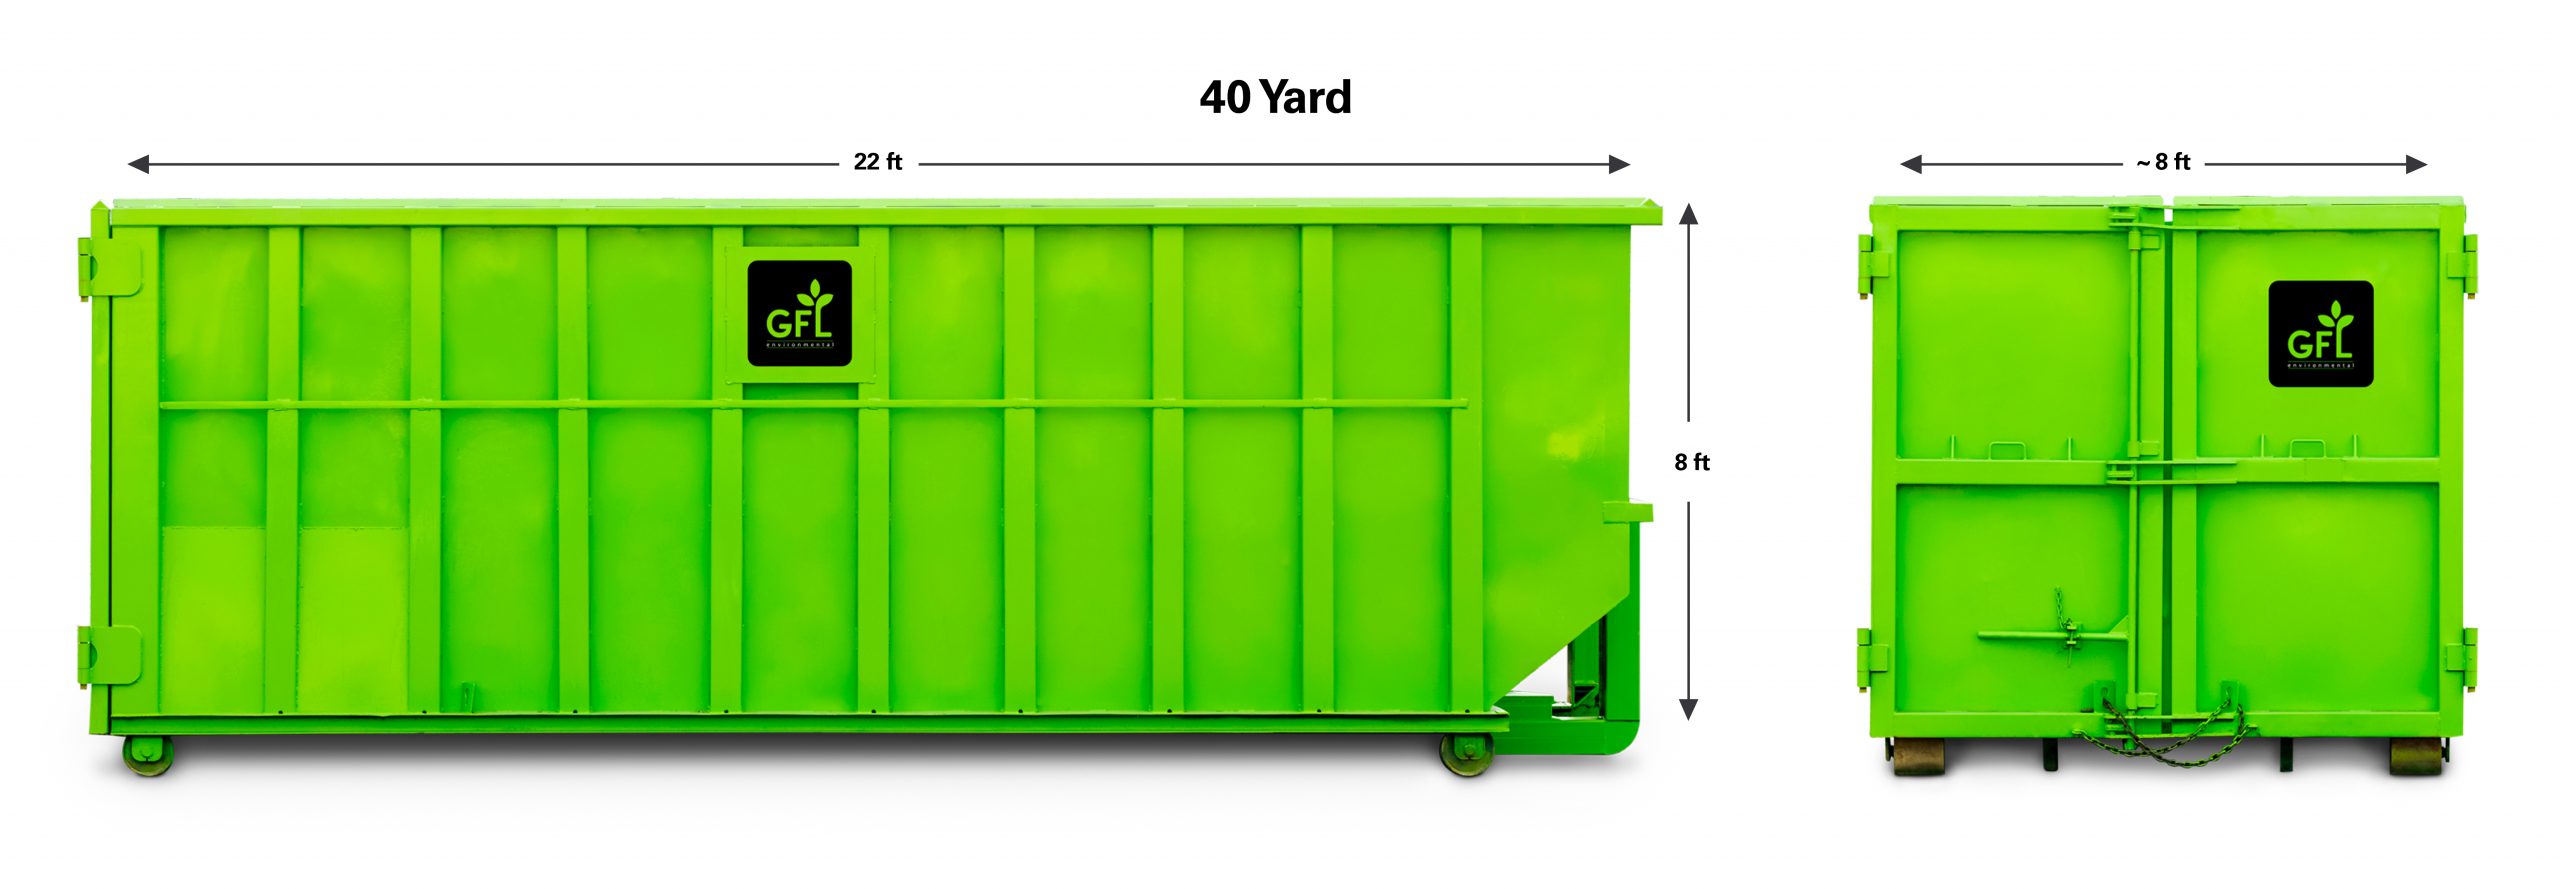 40 Yard Roll-off Dumpsters